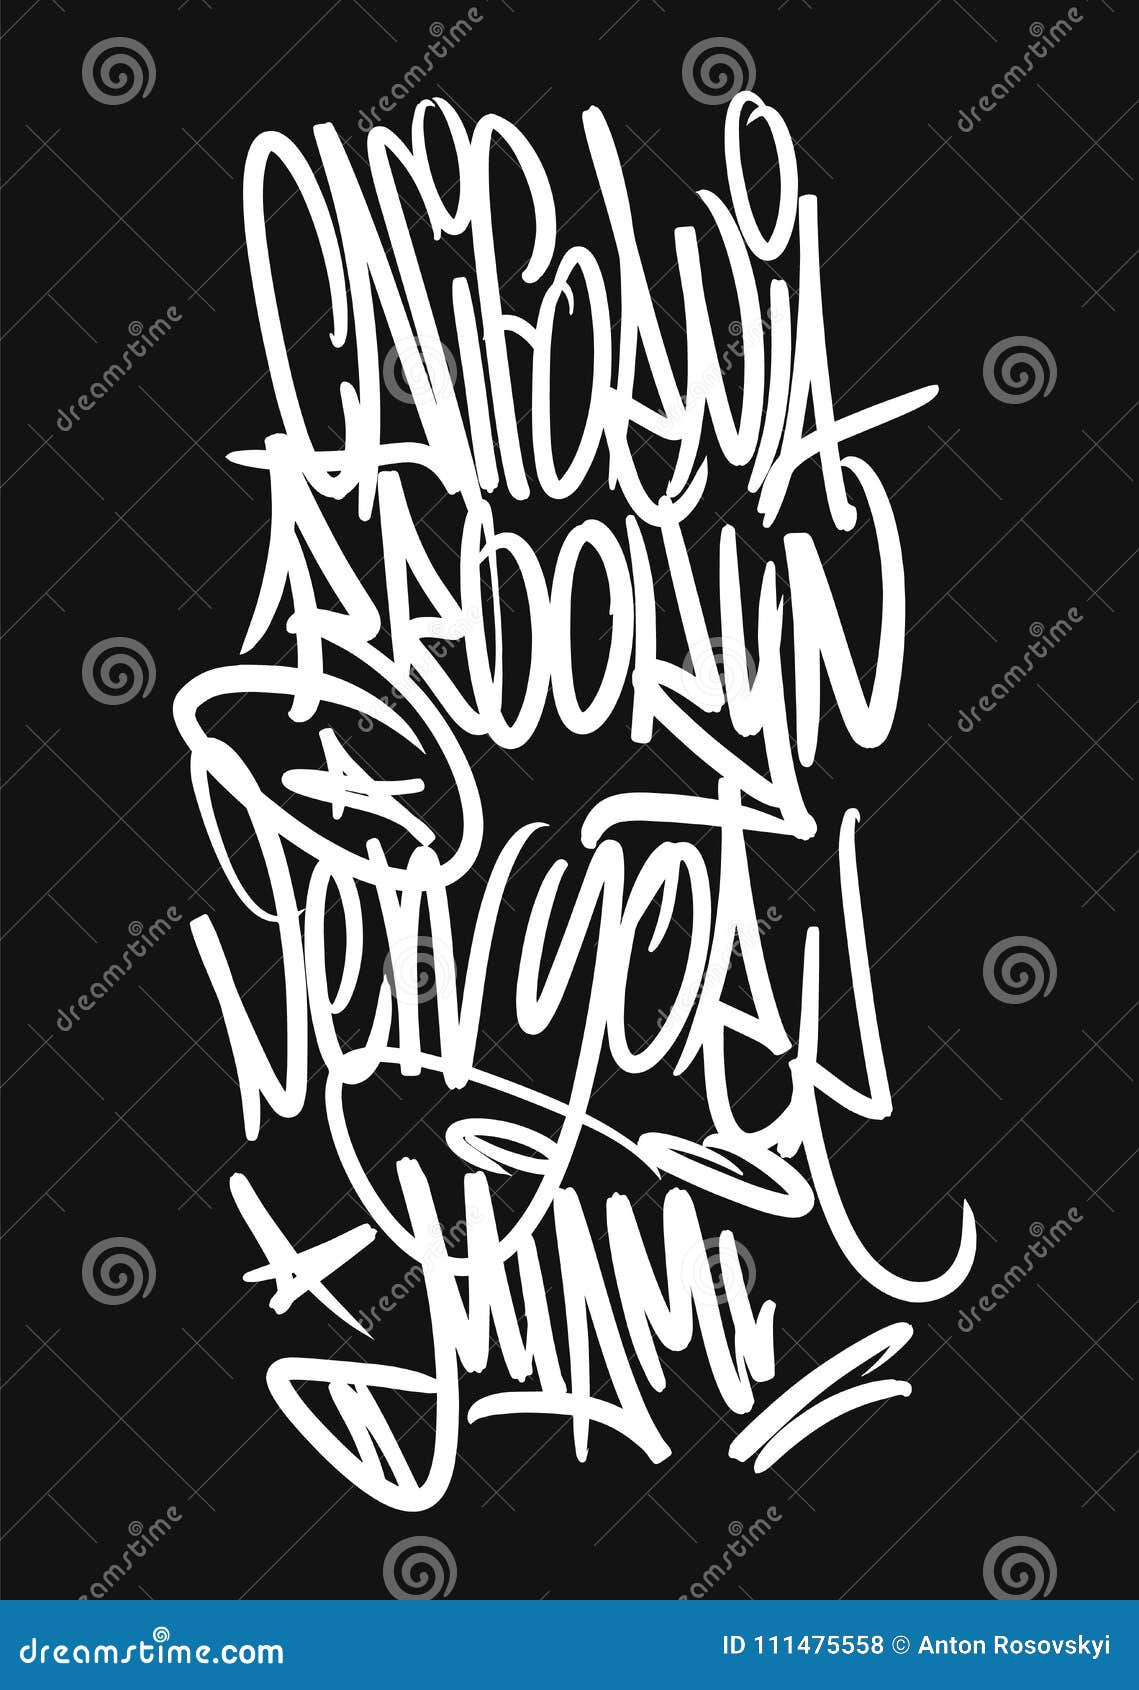 california brooklyn mew york miami graffiti slogan typography, t-shirt graphics